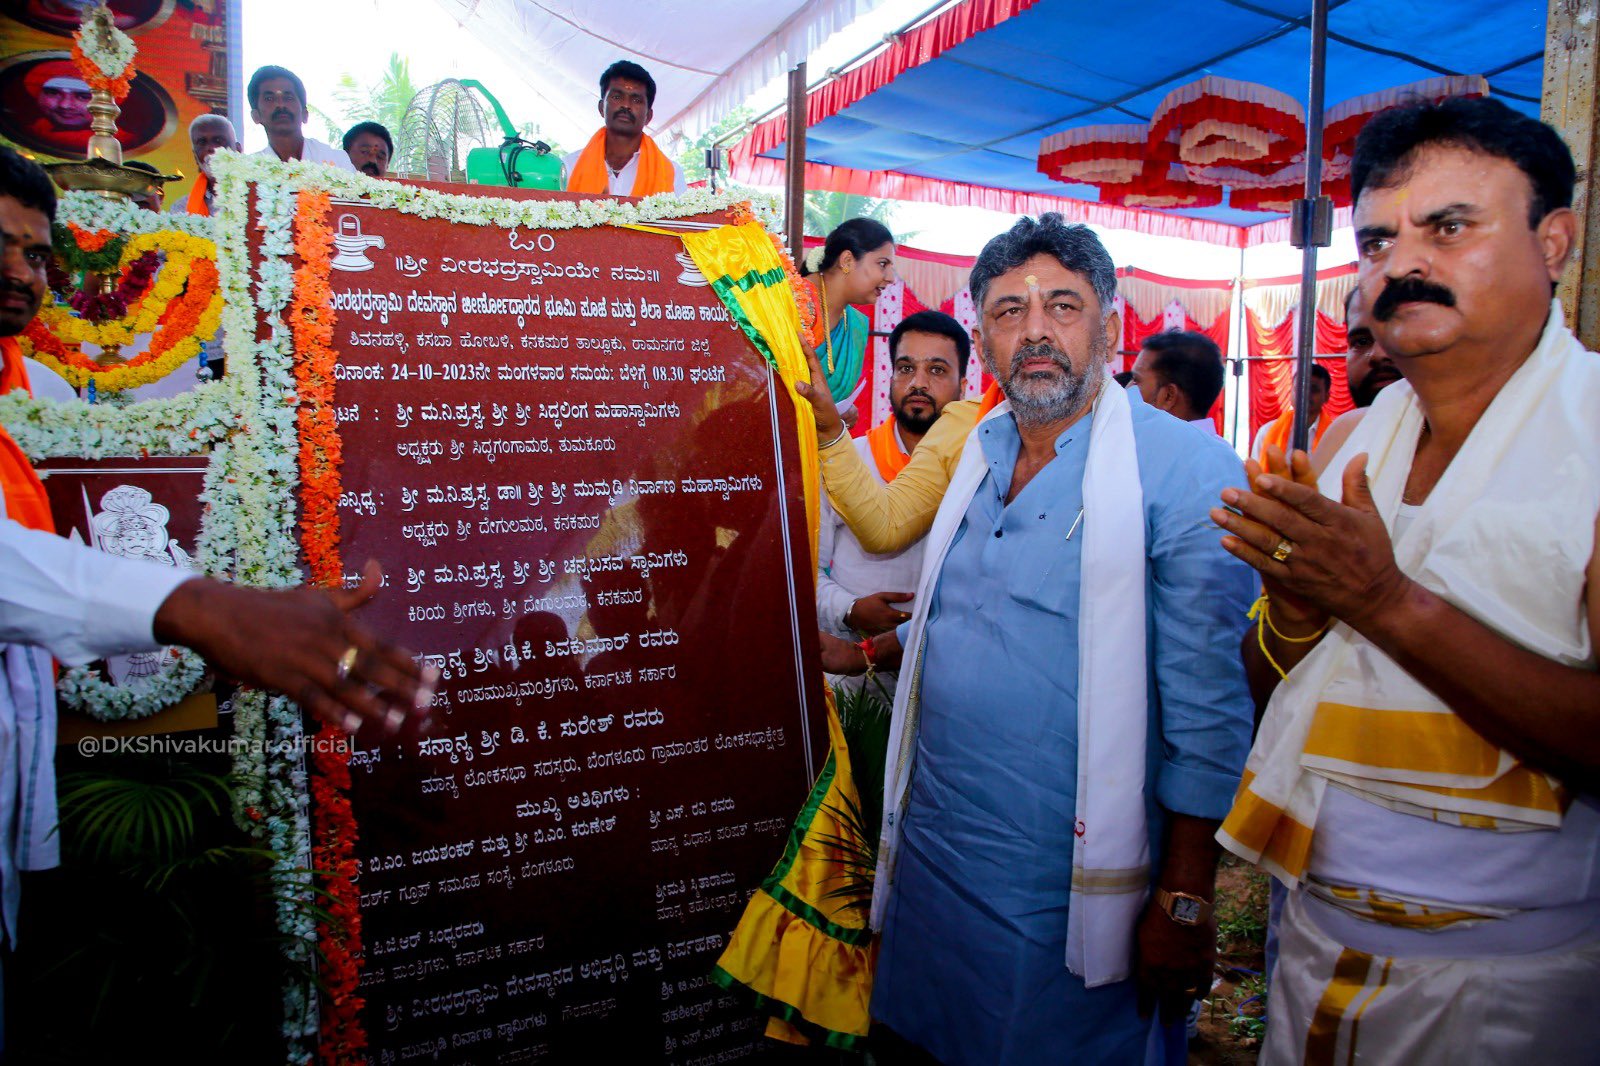 Shivakumar urged the people of Kanakapura not to sell their land.